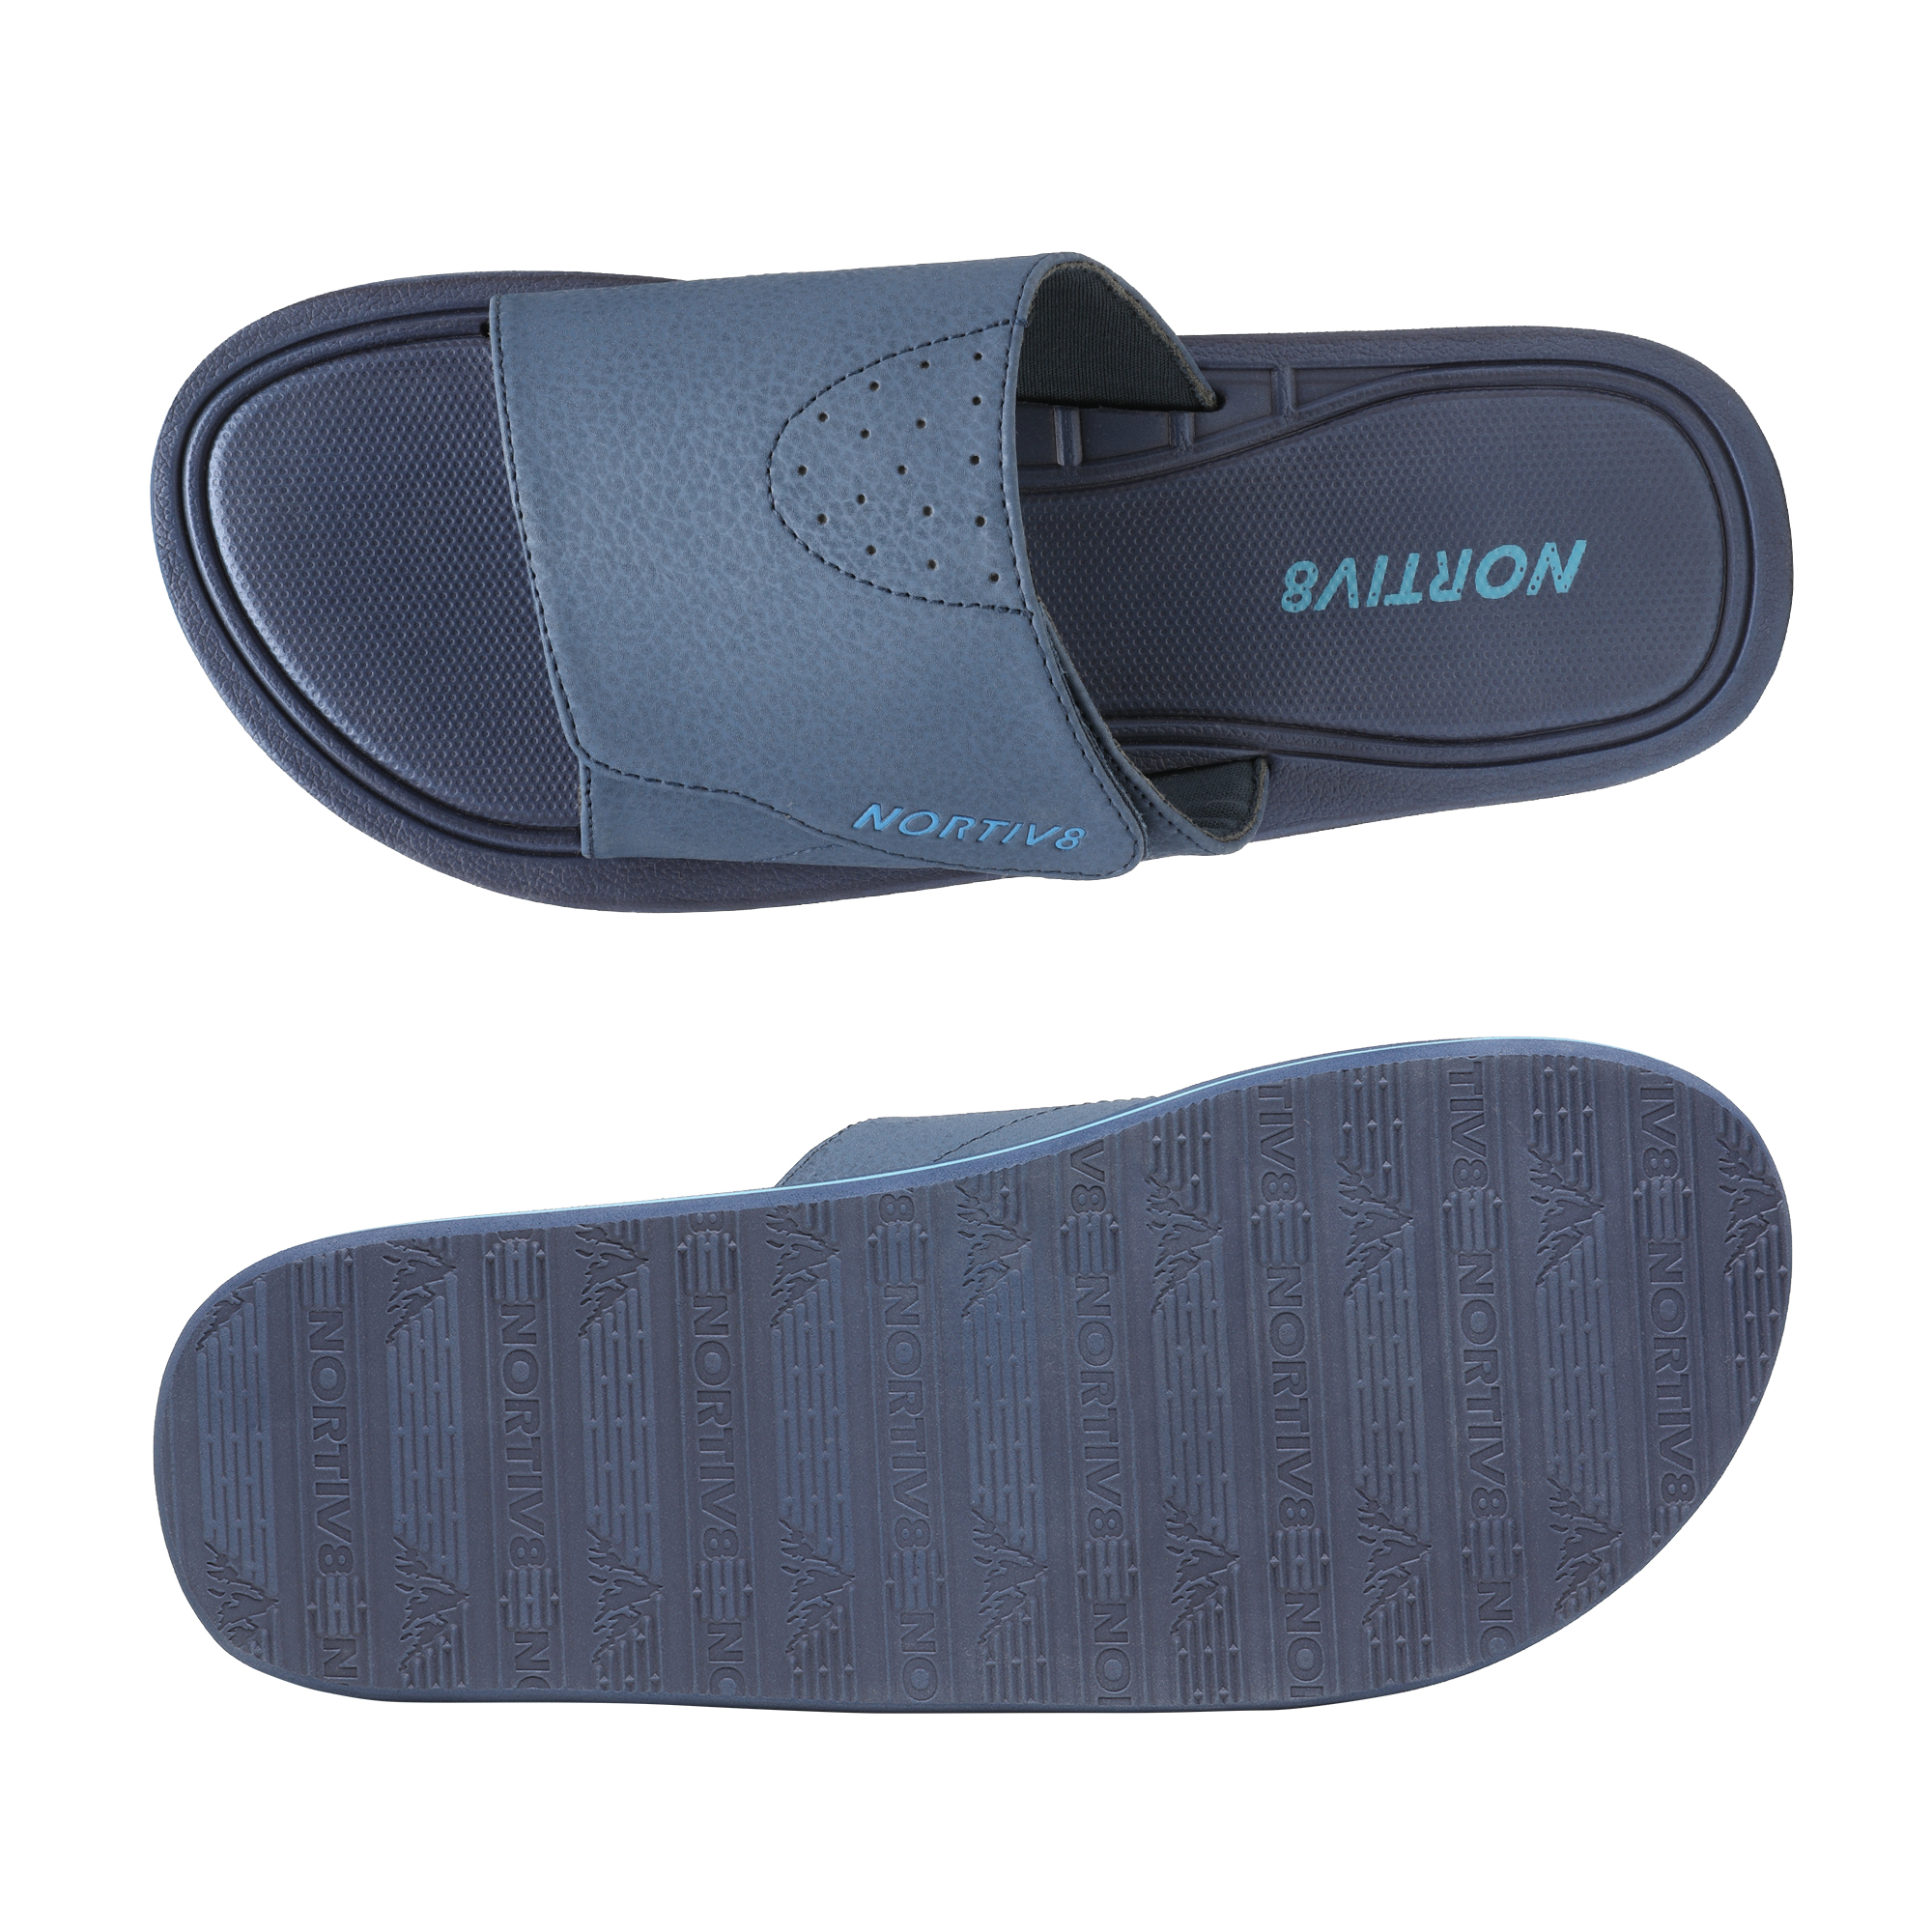 Nortiv8 Men's Memory Foam Adjustable Slide Sandals Comfort Lightweight Summer Beach Sandals Shoes FUSION NAVY Size 13 - image 3 of 5